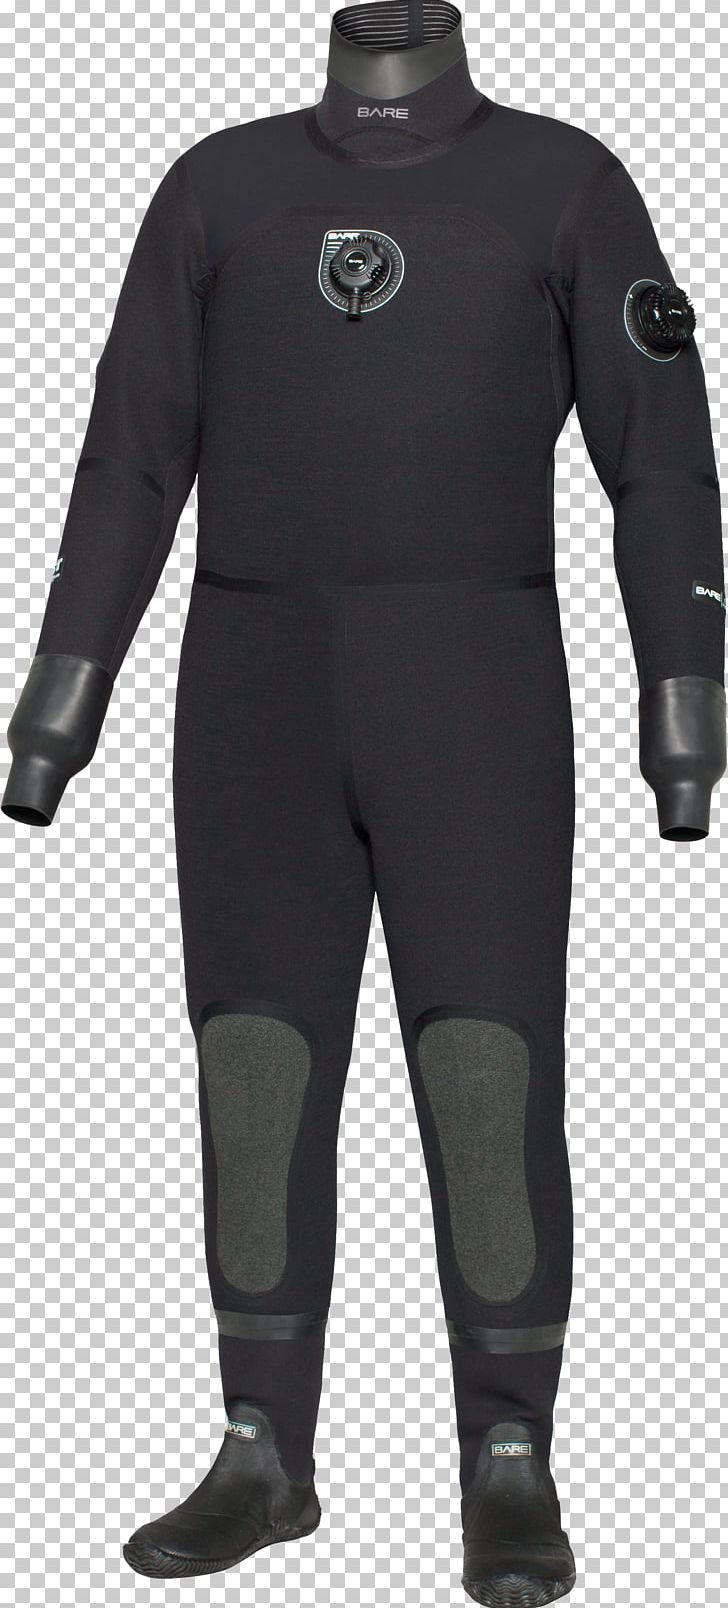 Dry Suit Neoprene Diving Suit Scuba Diving Wetsuit PNG, Clipart, Bare, Braces, Clothing, Costume, D 6 Free PNG Download